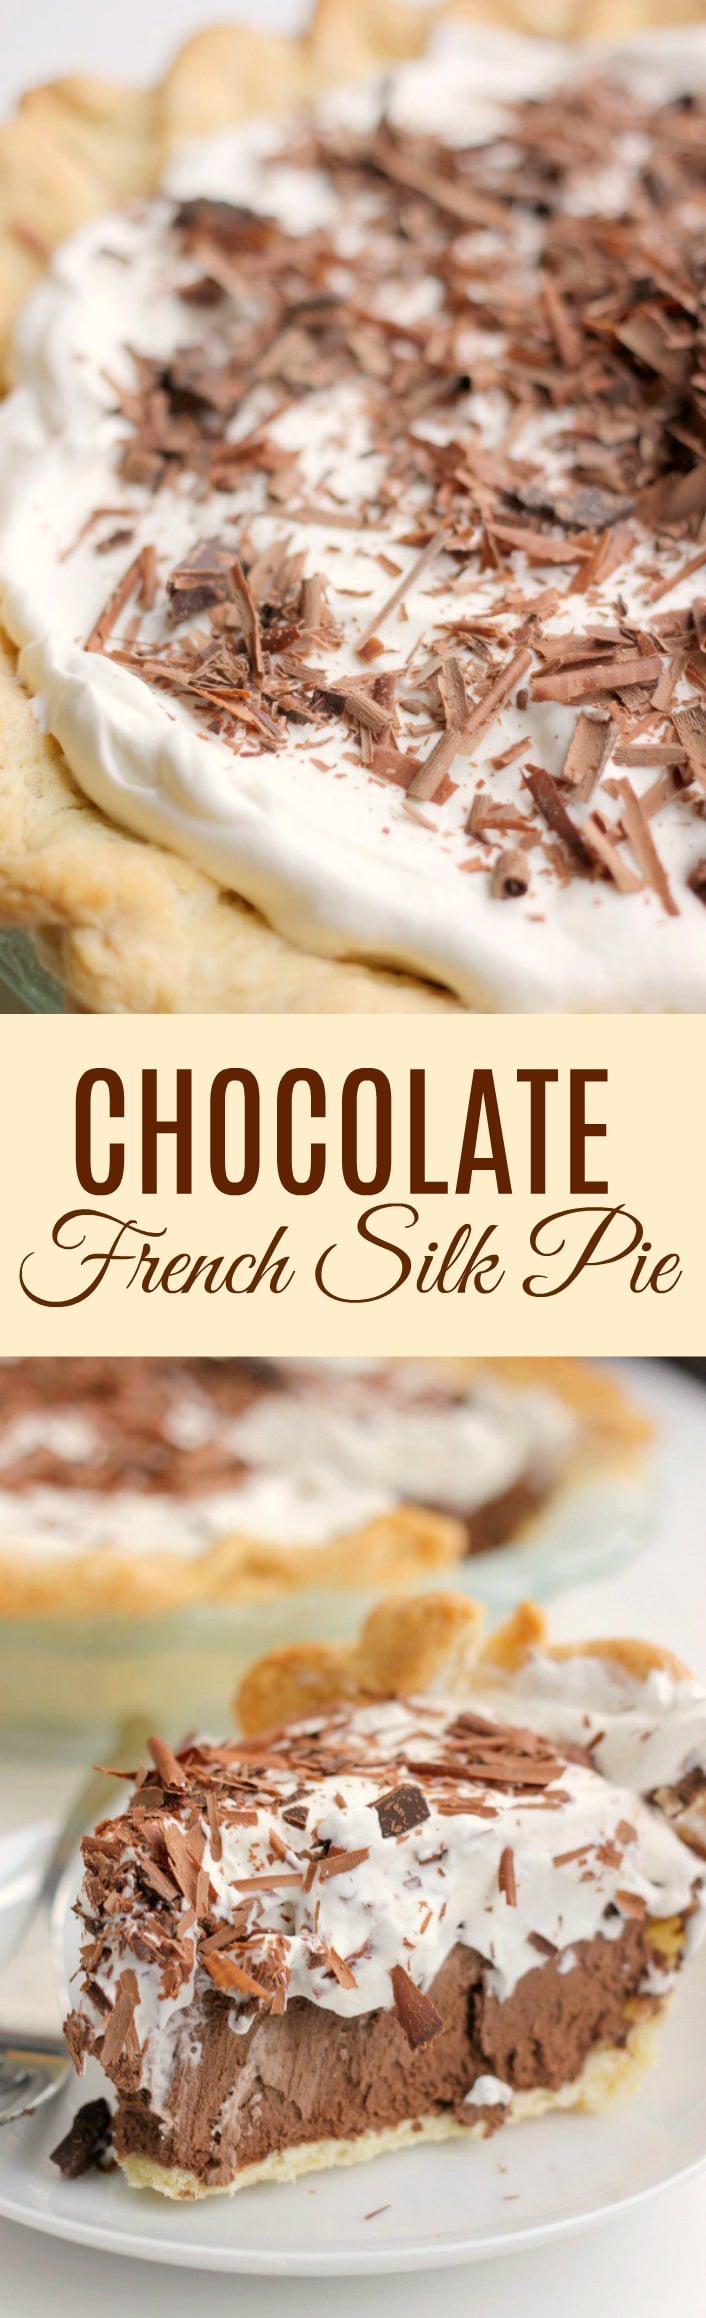 Easy Chocolate French Silk Pie Recipe